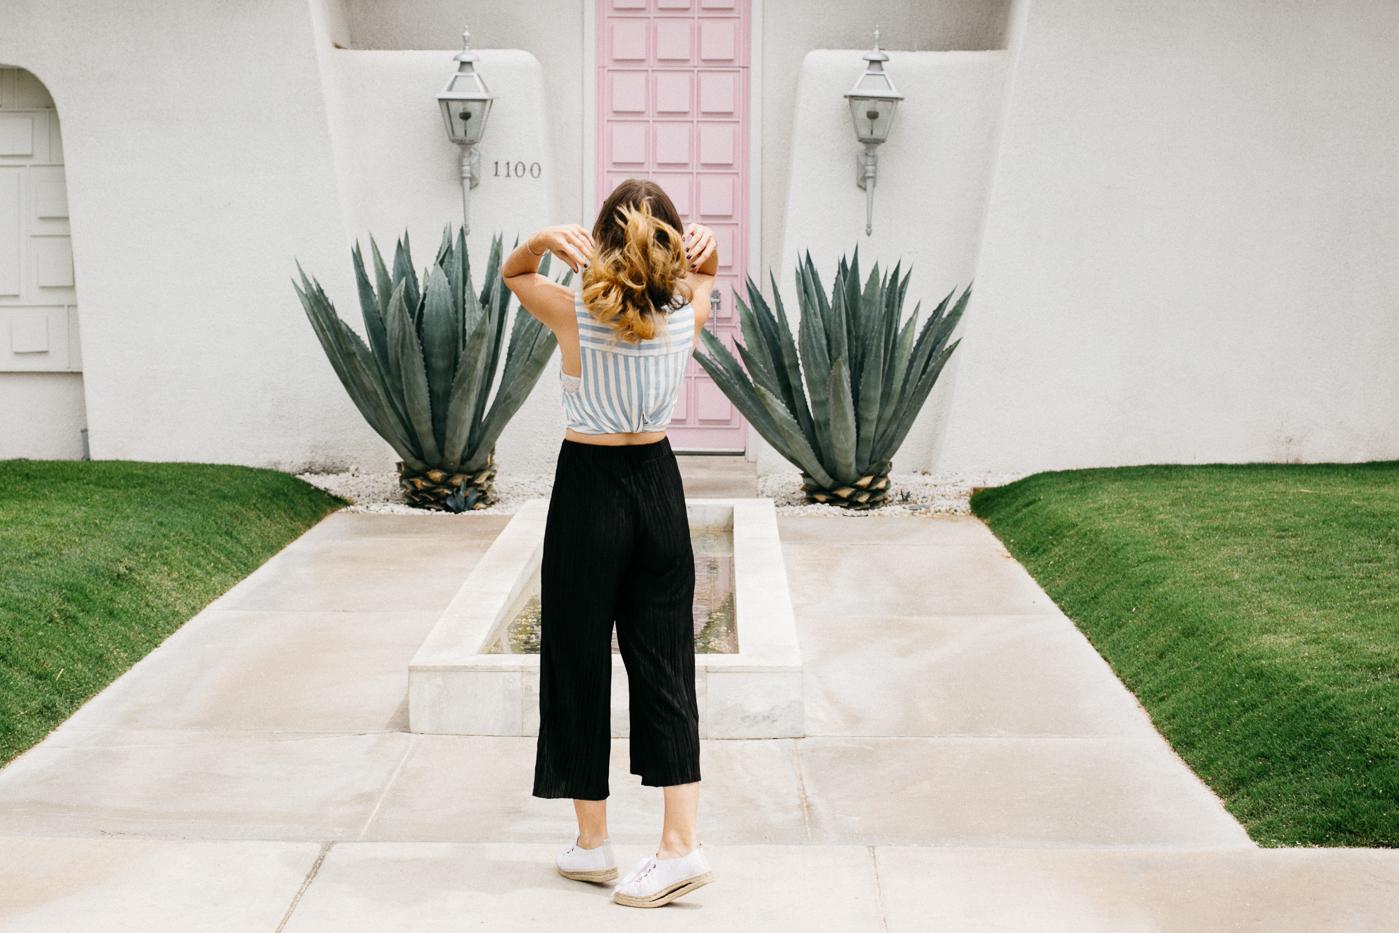 Things To Do In Palm Springs: Modernism, That Pink Door | Bikinis & Passports